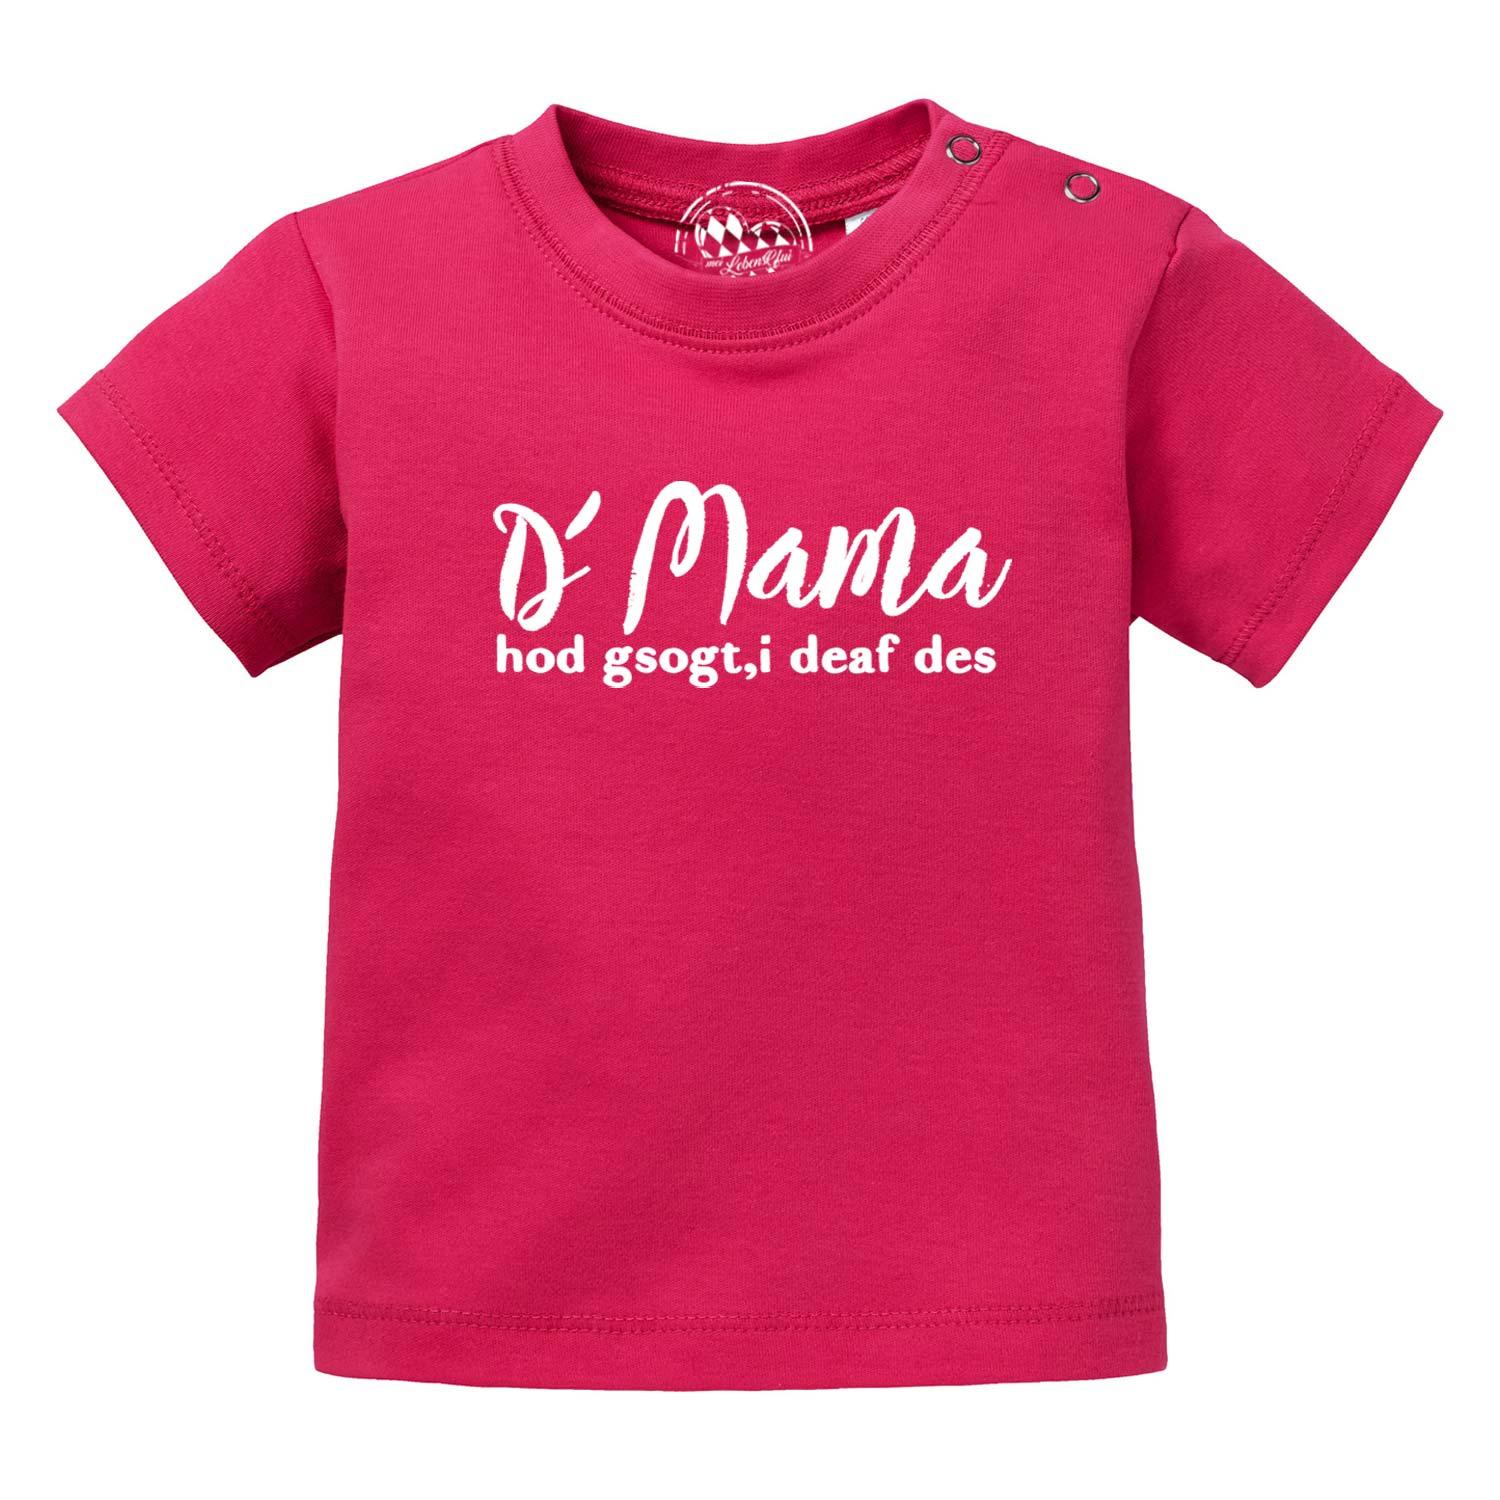 Baby T-Shirt "Mama sogt, i deaf des!" - bavariashop - mei LebensGfui